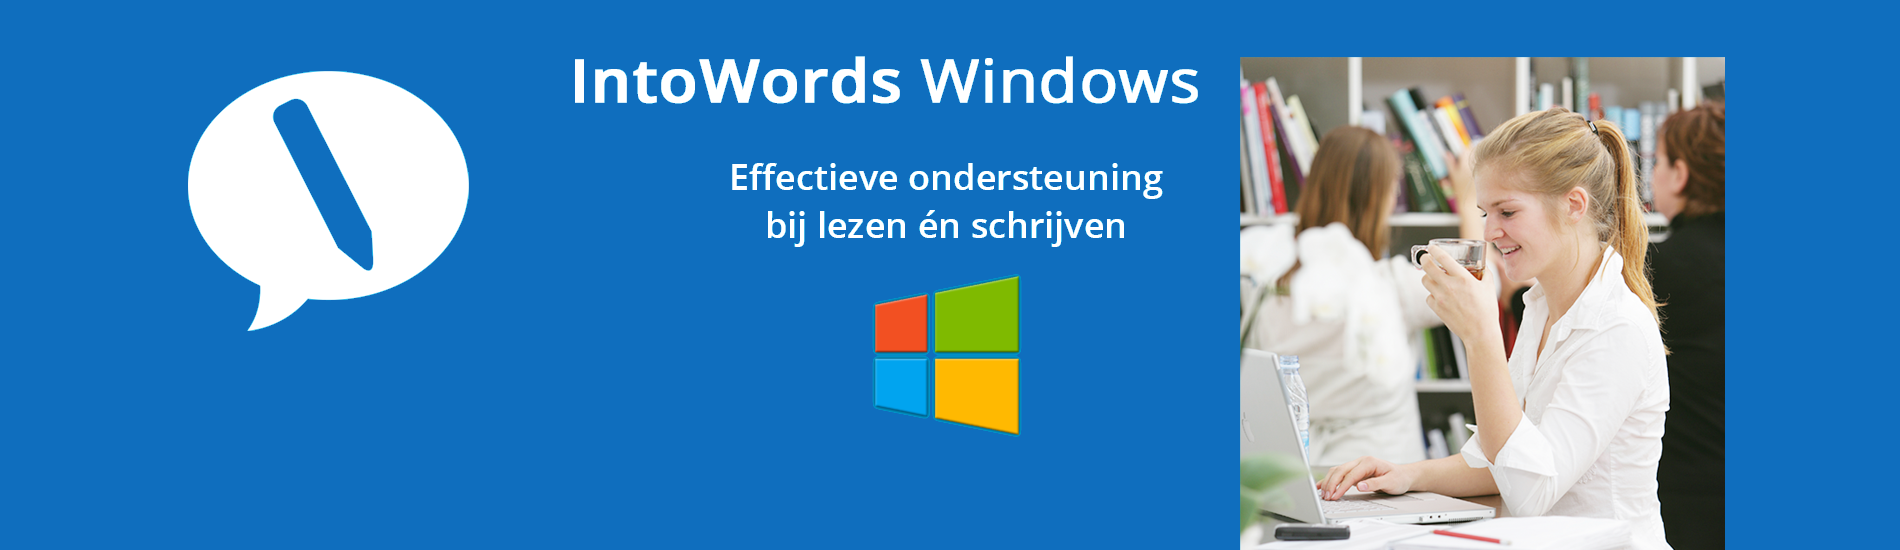 slider intowords windows